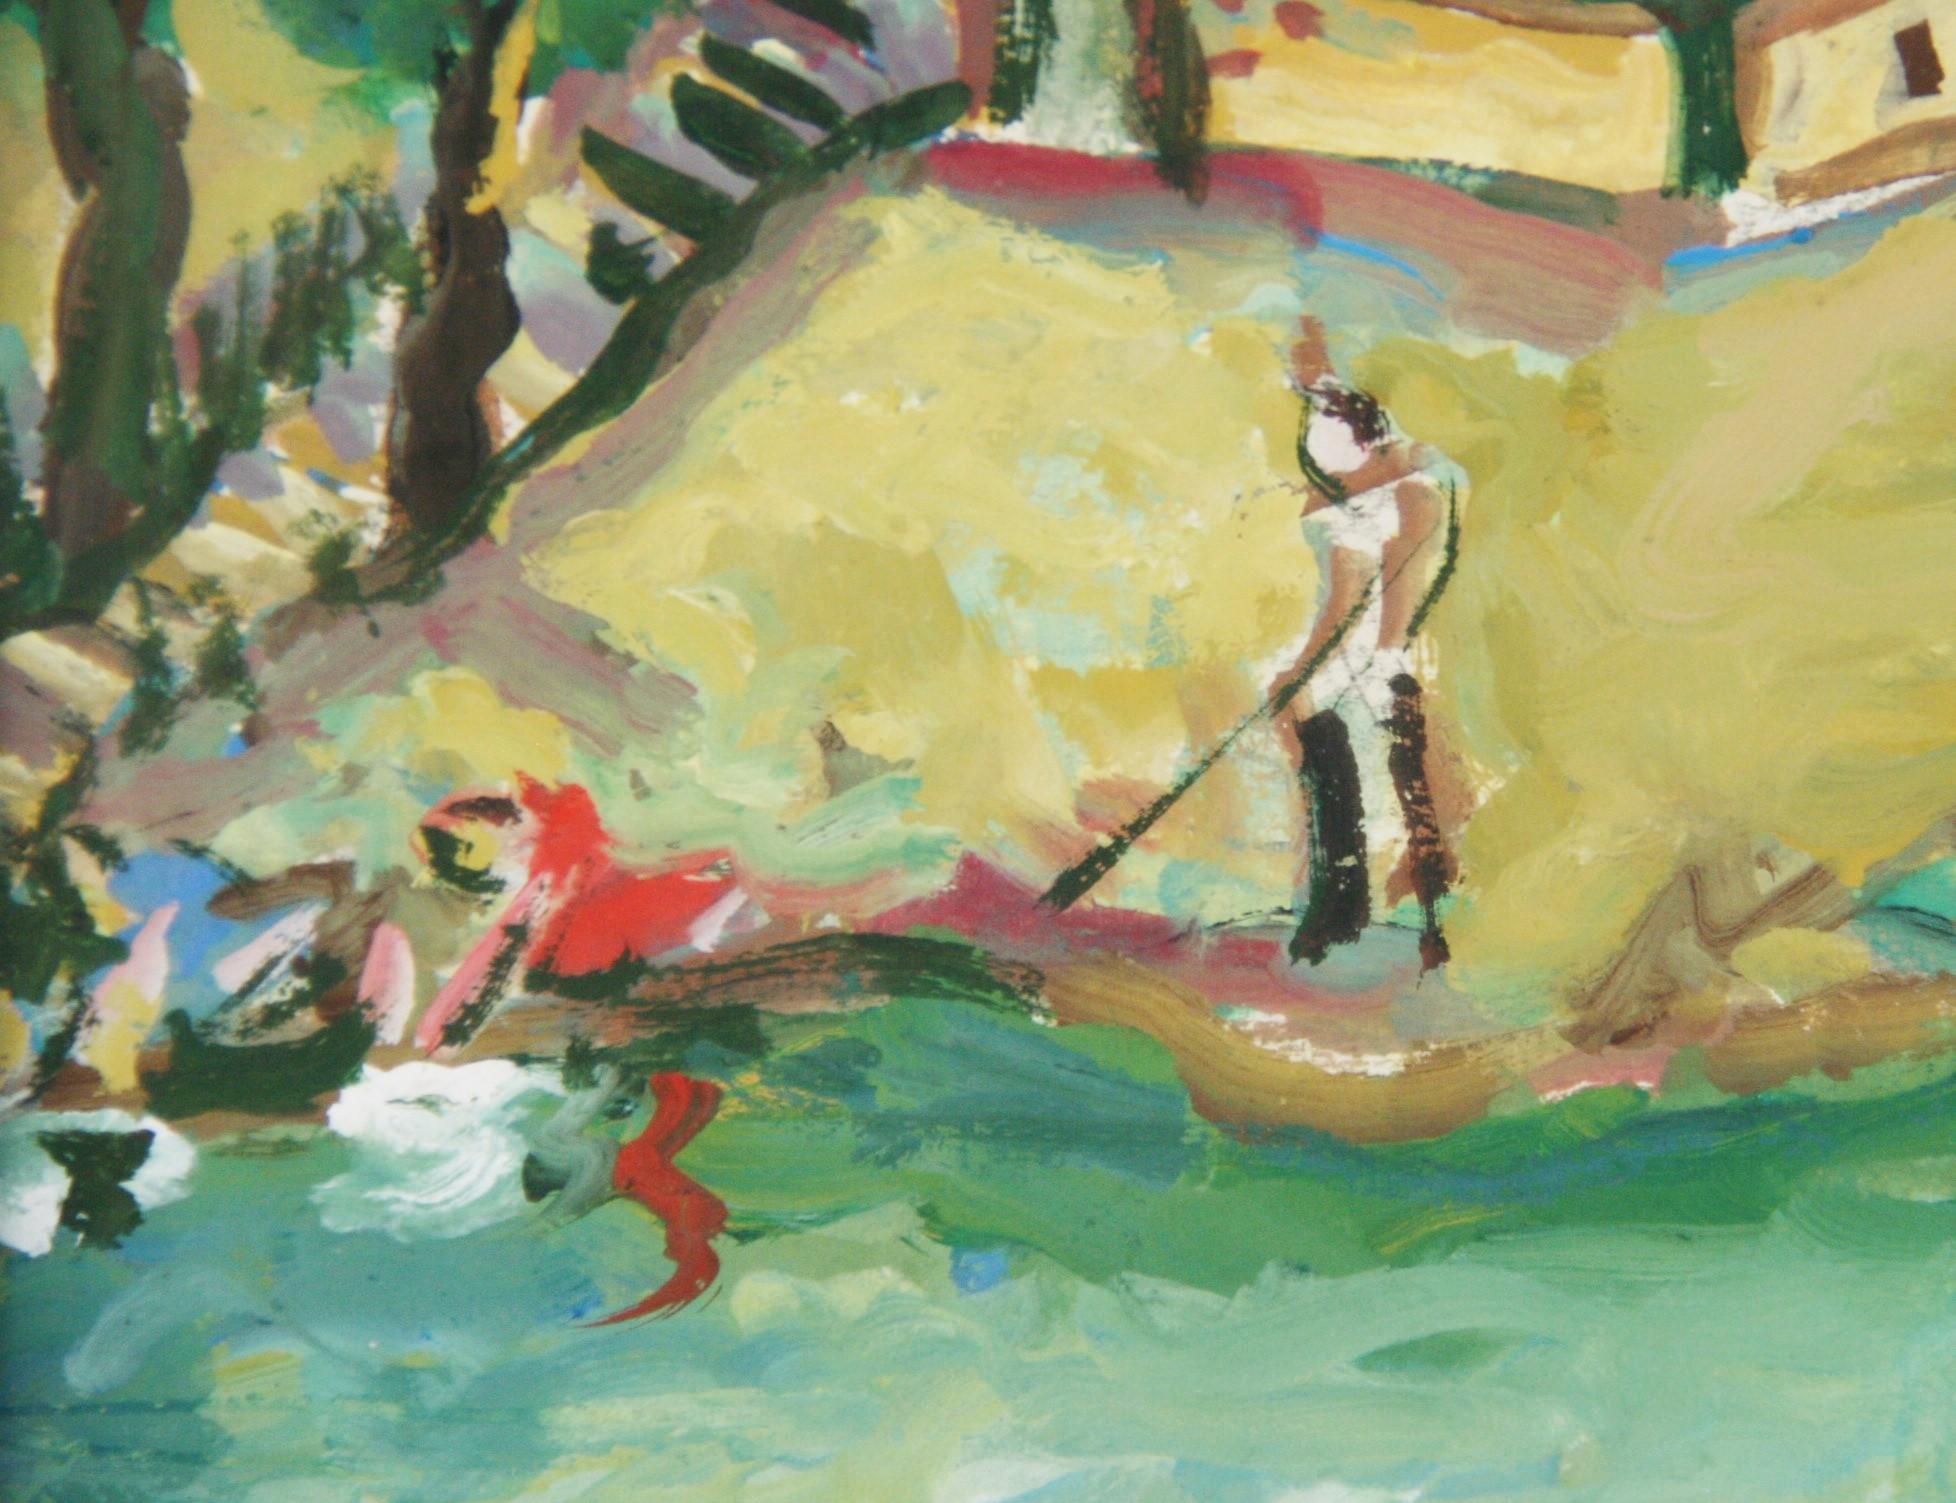 3905 Impressionist French village colorful  landscape gouache on laid paper
Image size 16x11.5